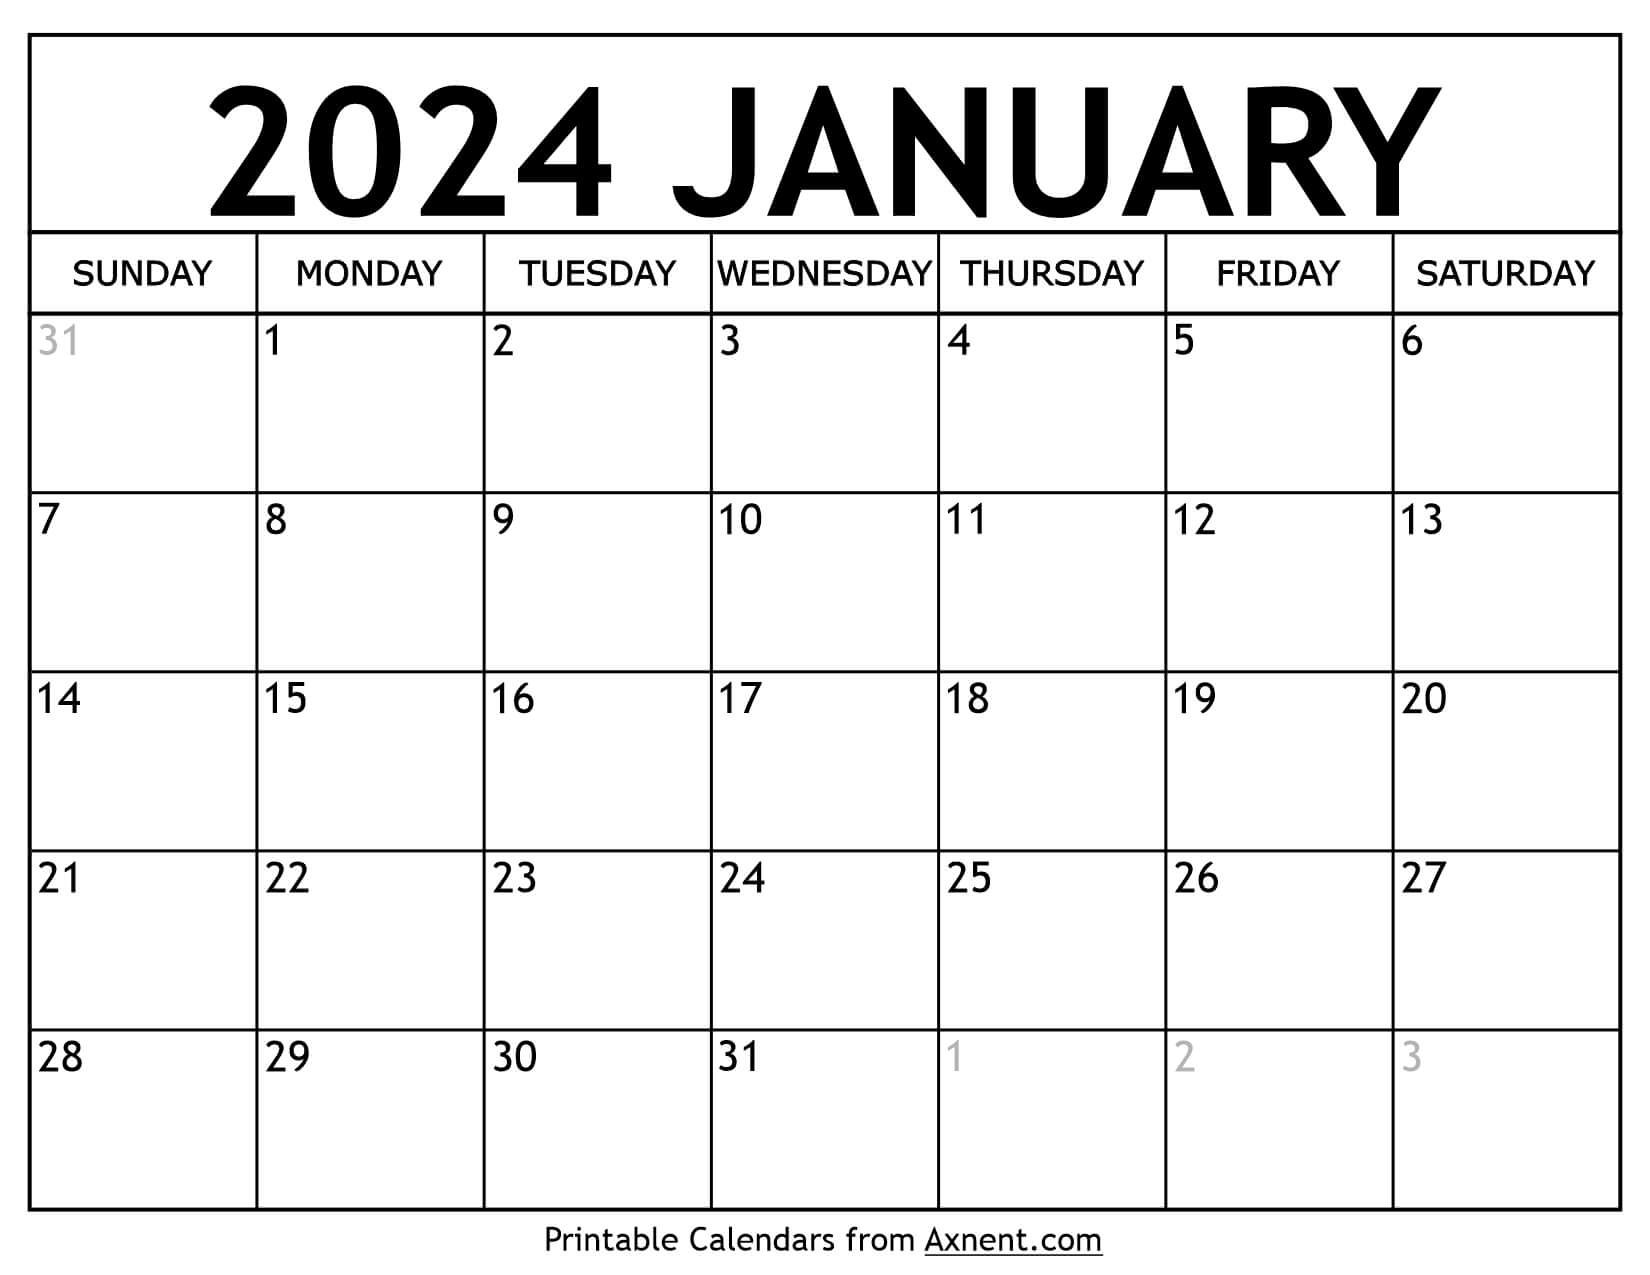 Printable January 2024 Calendar Template - Print Now for Calendar Free Printable January 2024